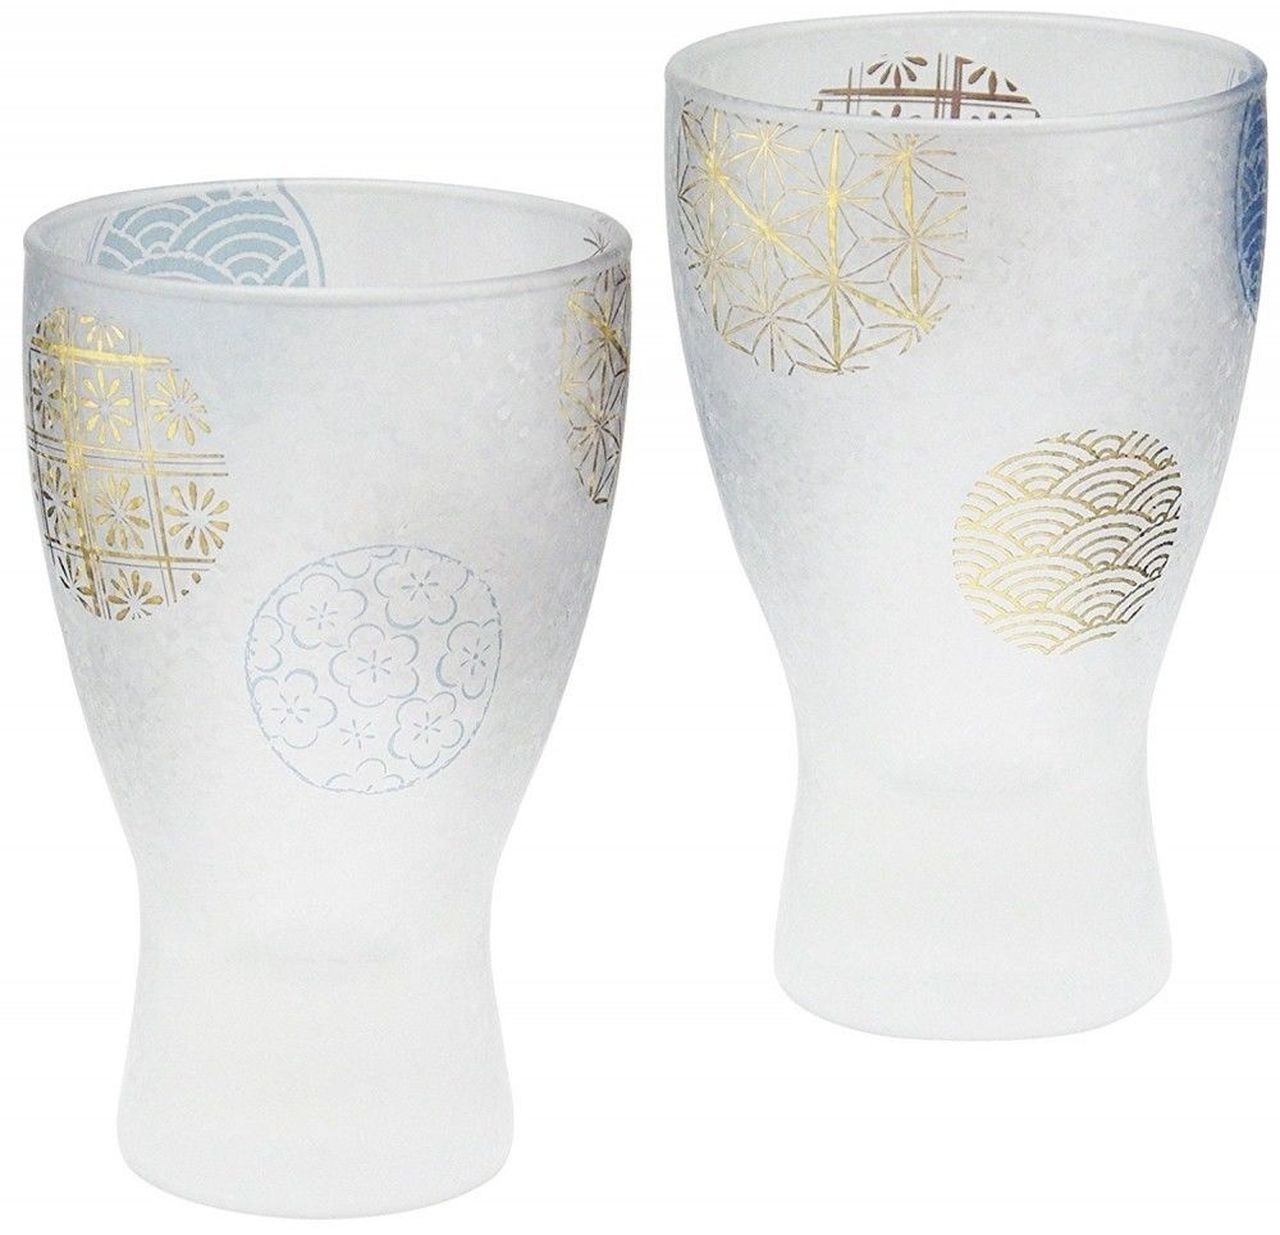 Japanese glass Sake cup set of 2 Guinomi Ochoko glass Marumon from Japan